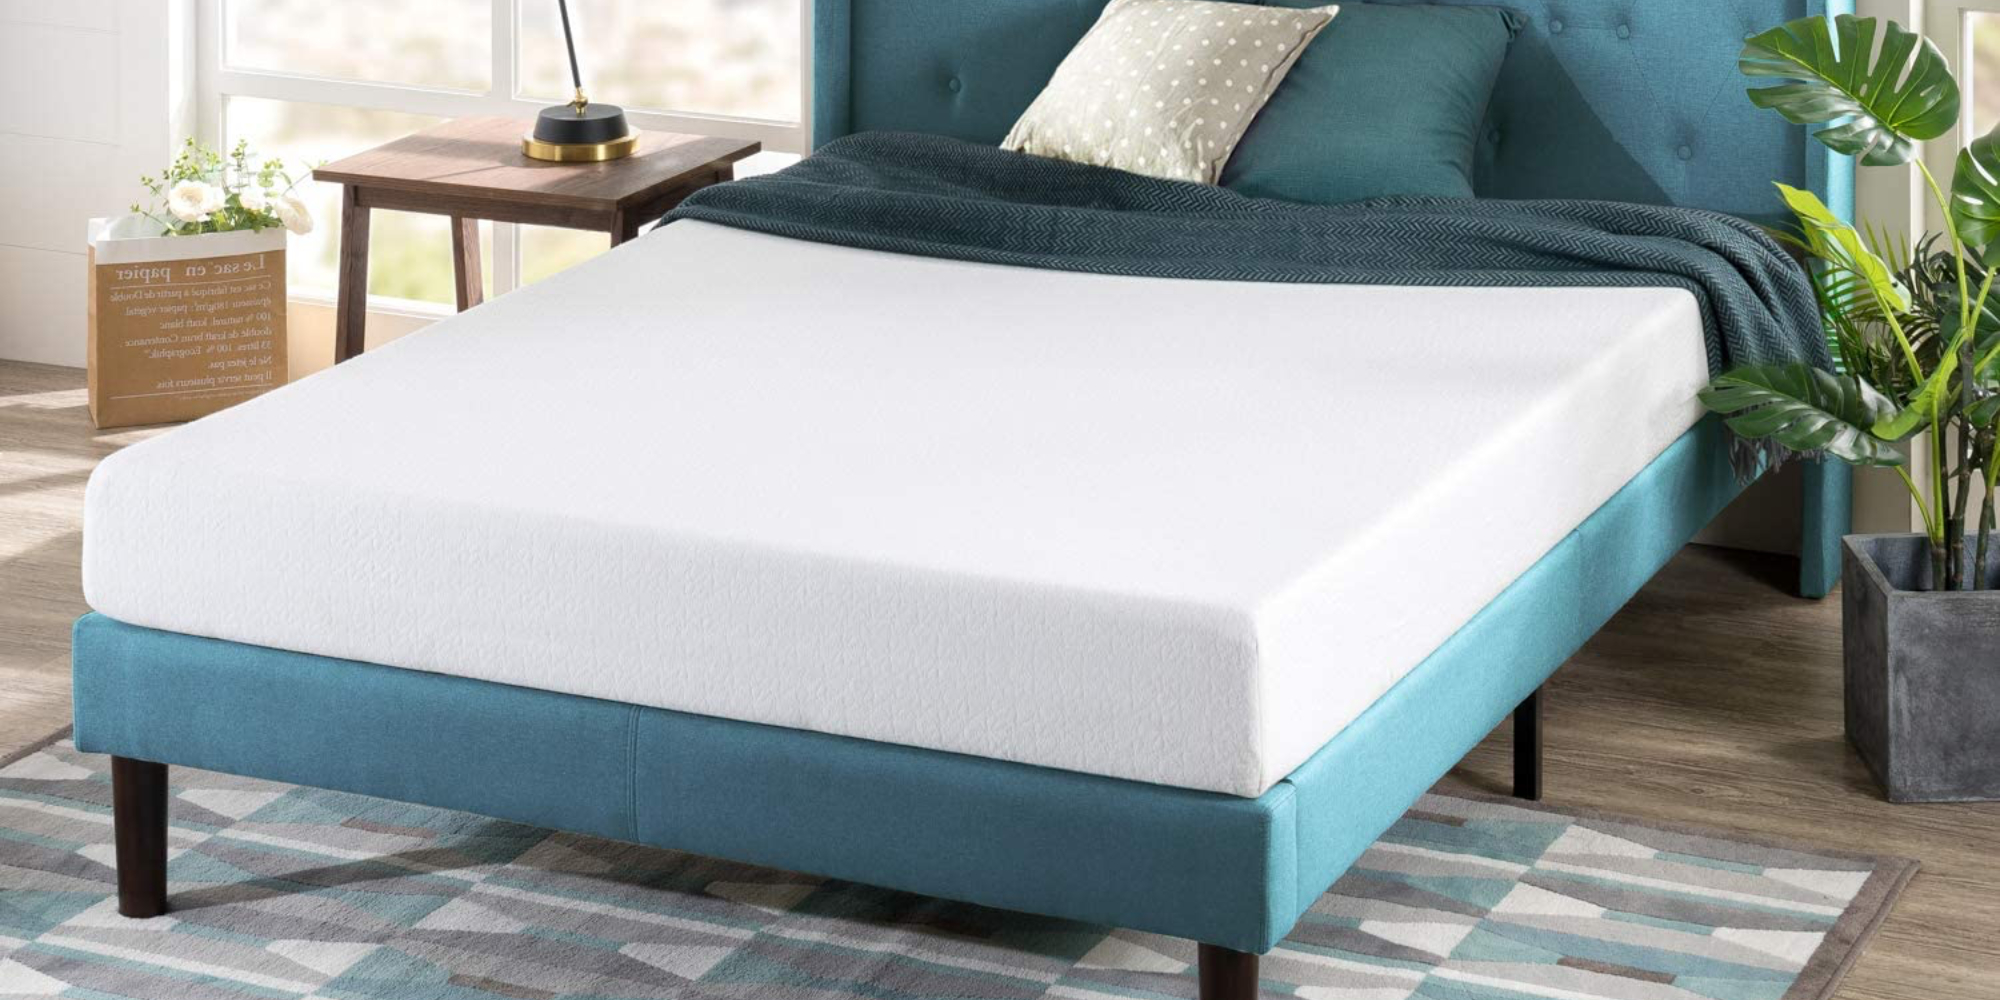 zinus 6 inch foam and spring mattress